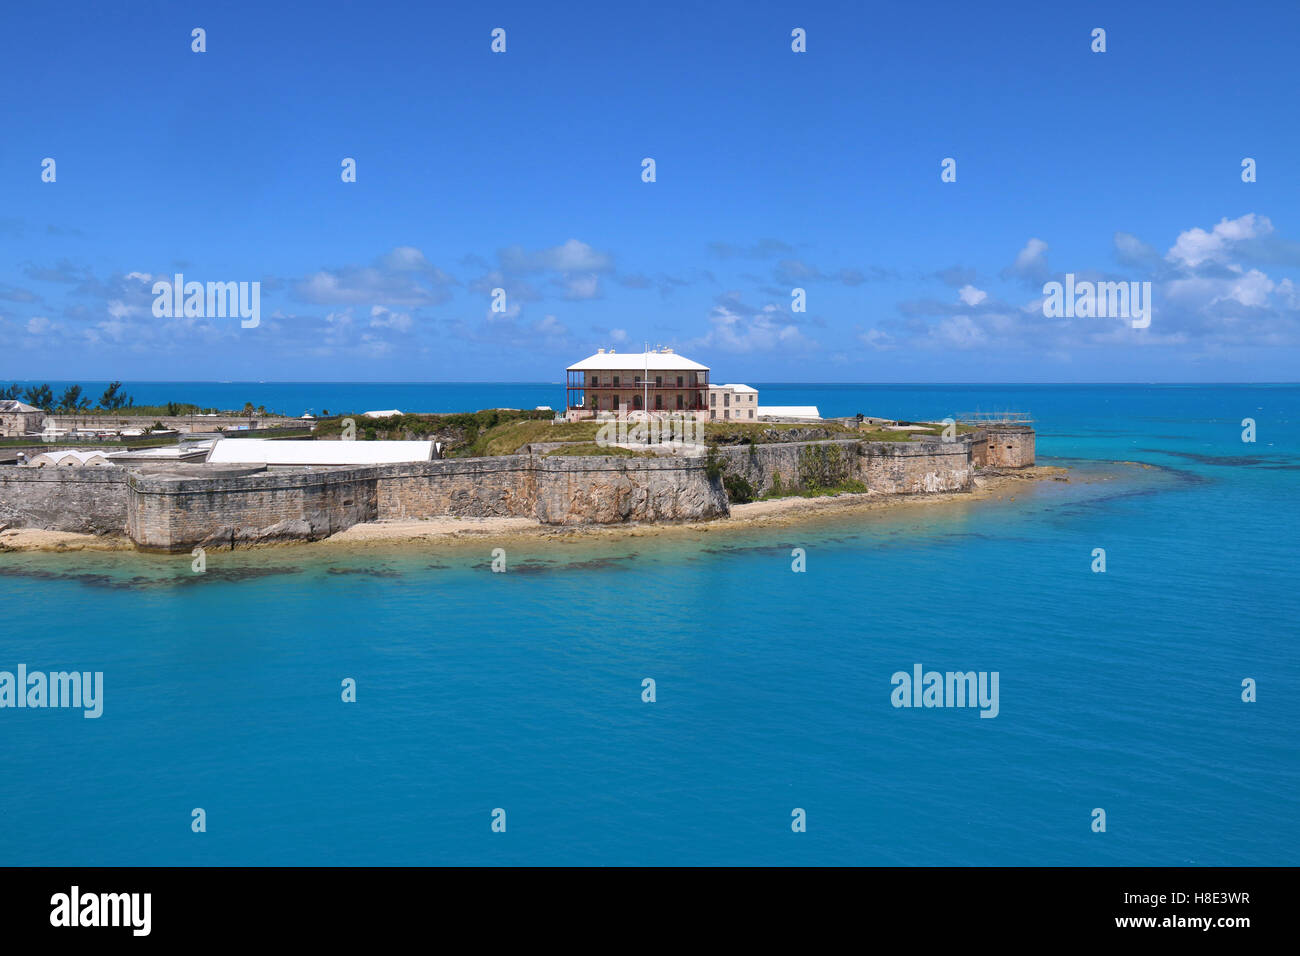 King's Wharf Bermuda view from the Sea, North Arm, Royal Naval Dockyard, King´s Port,  Bermuda. Stock Photo